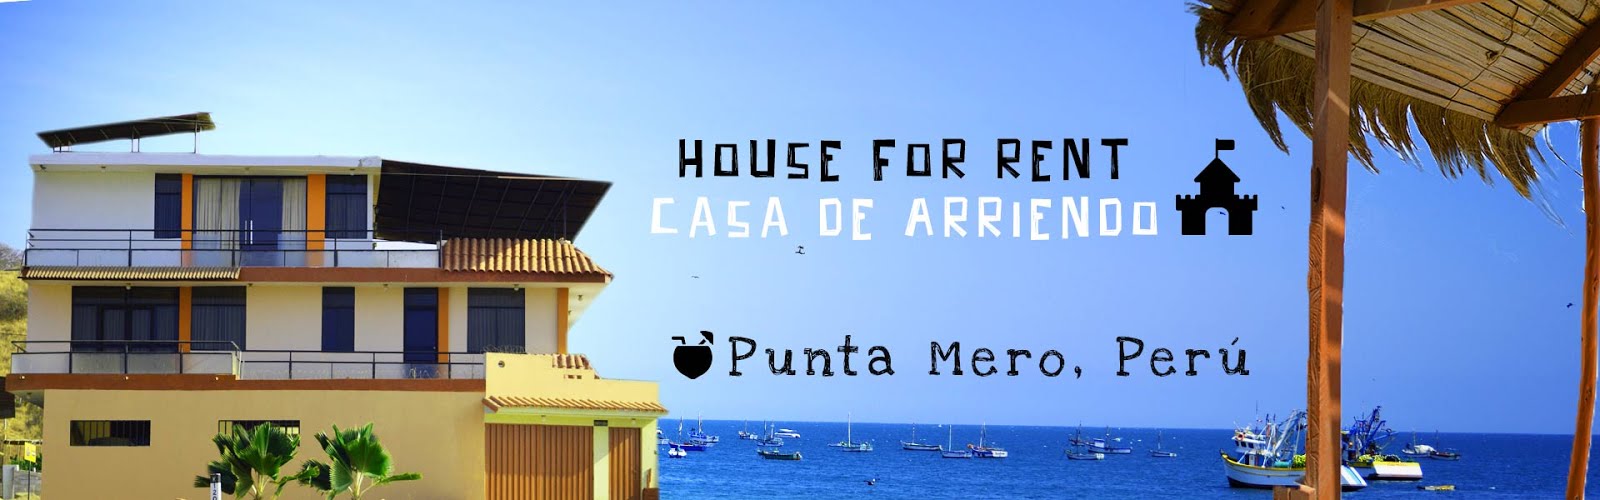 House for rent in Punta Mero - Casa de Arriendo en Punta Mero, Perú